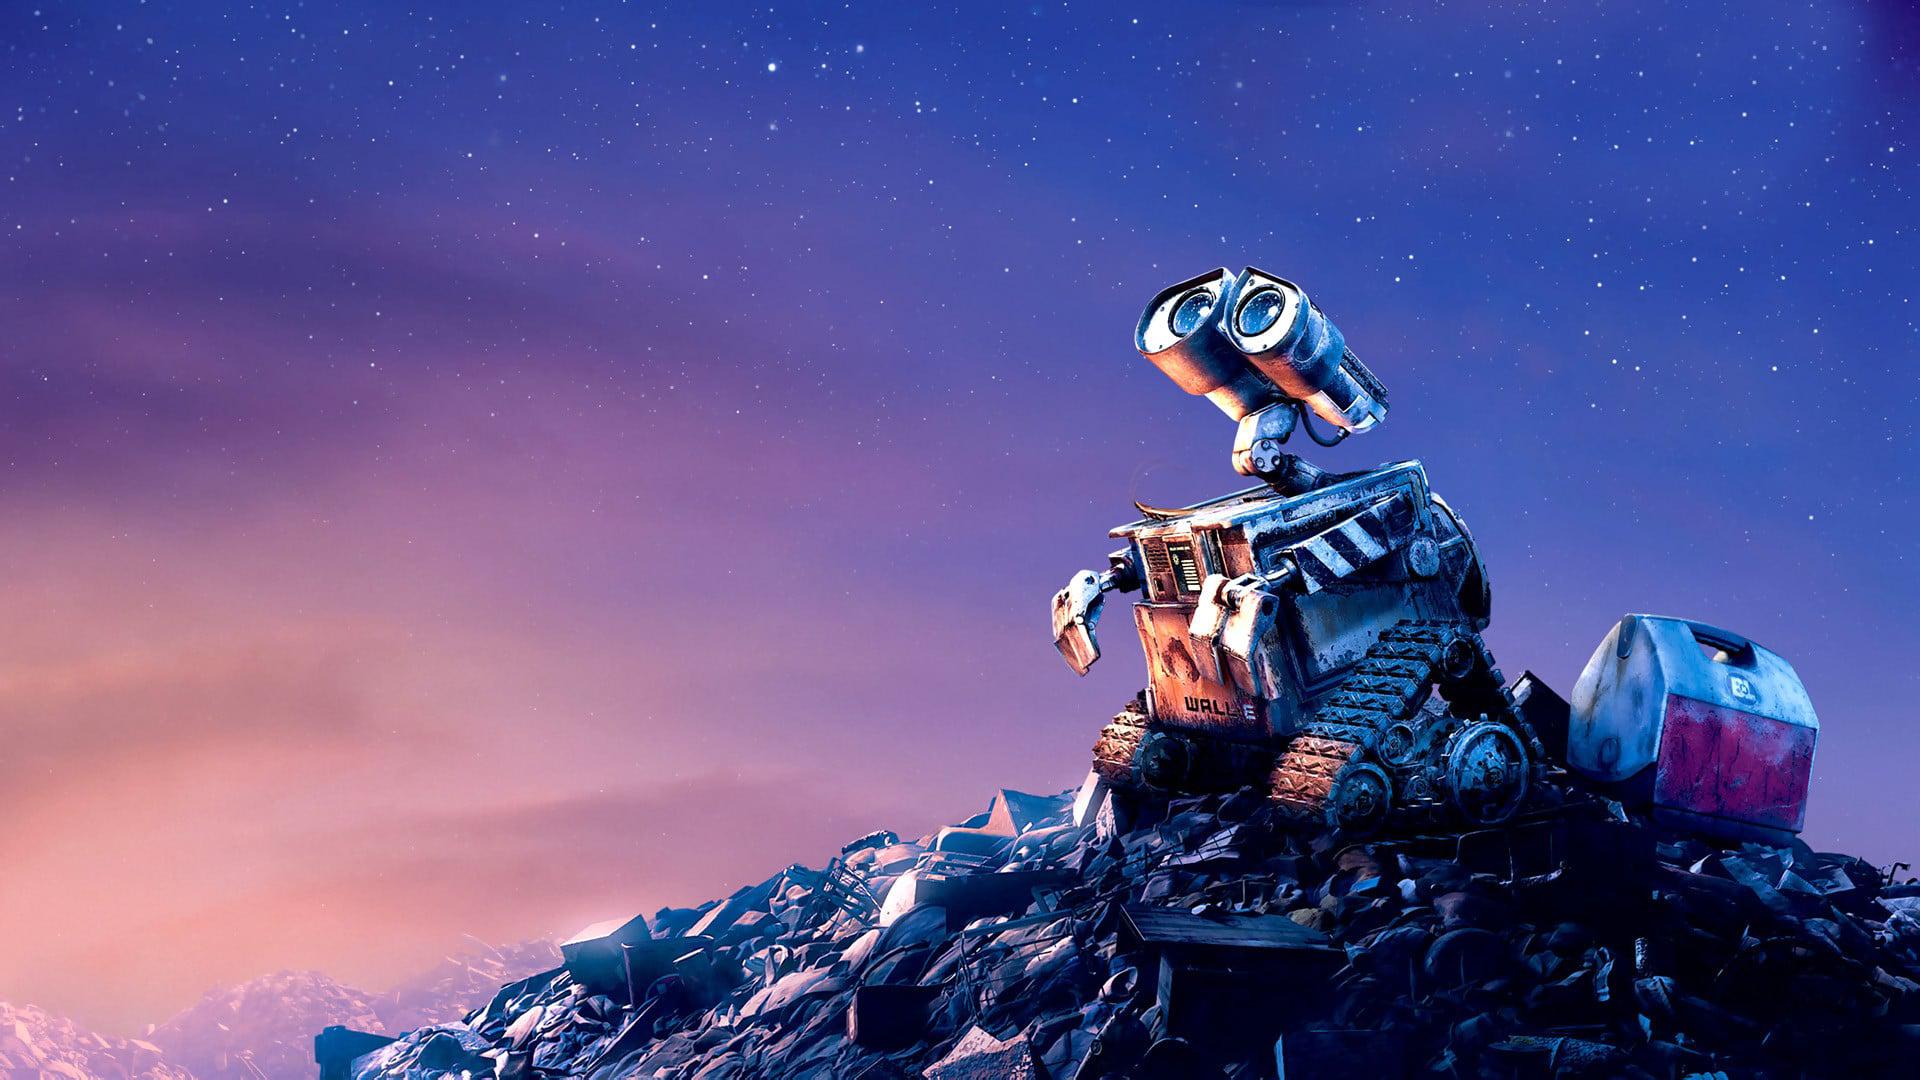 Backdrop Image for WALL-E